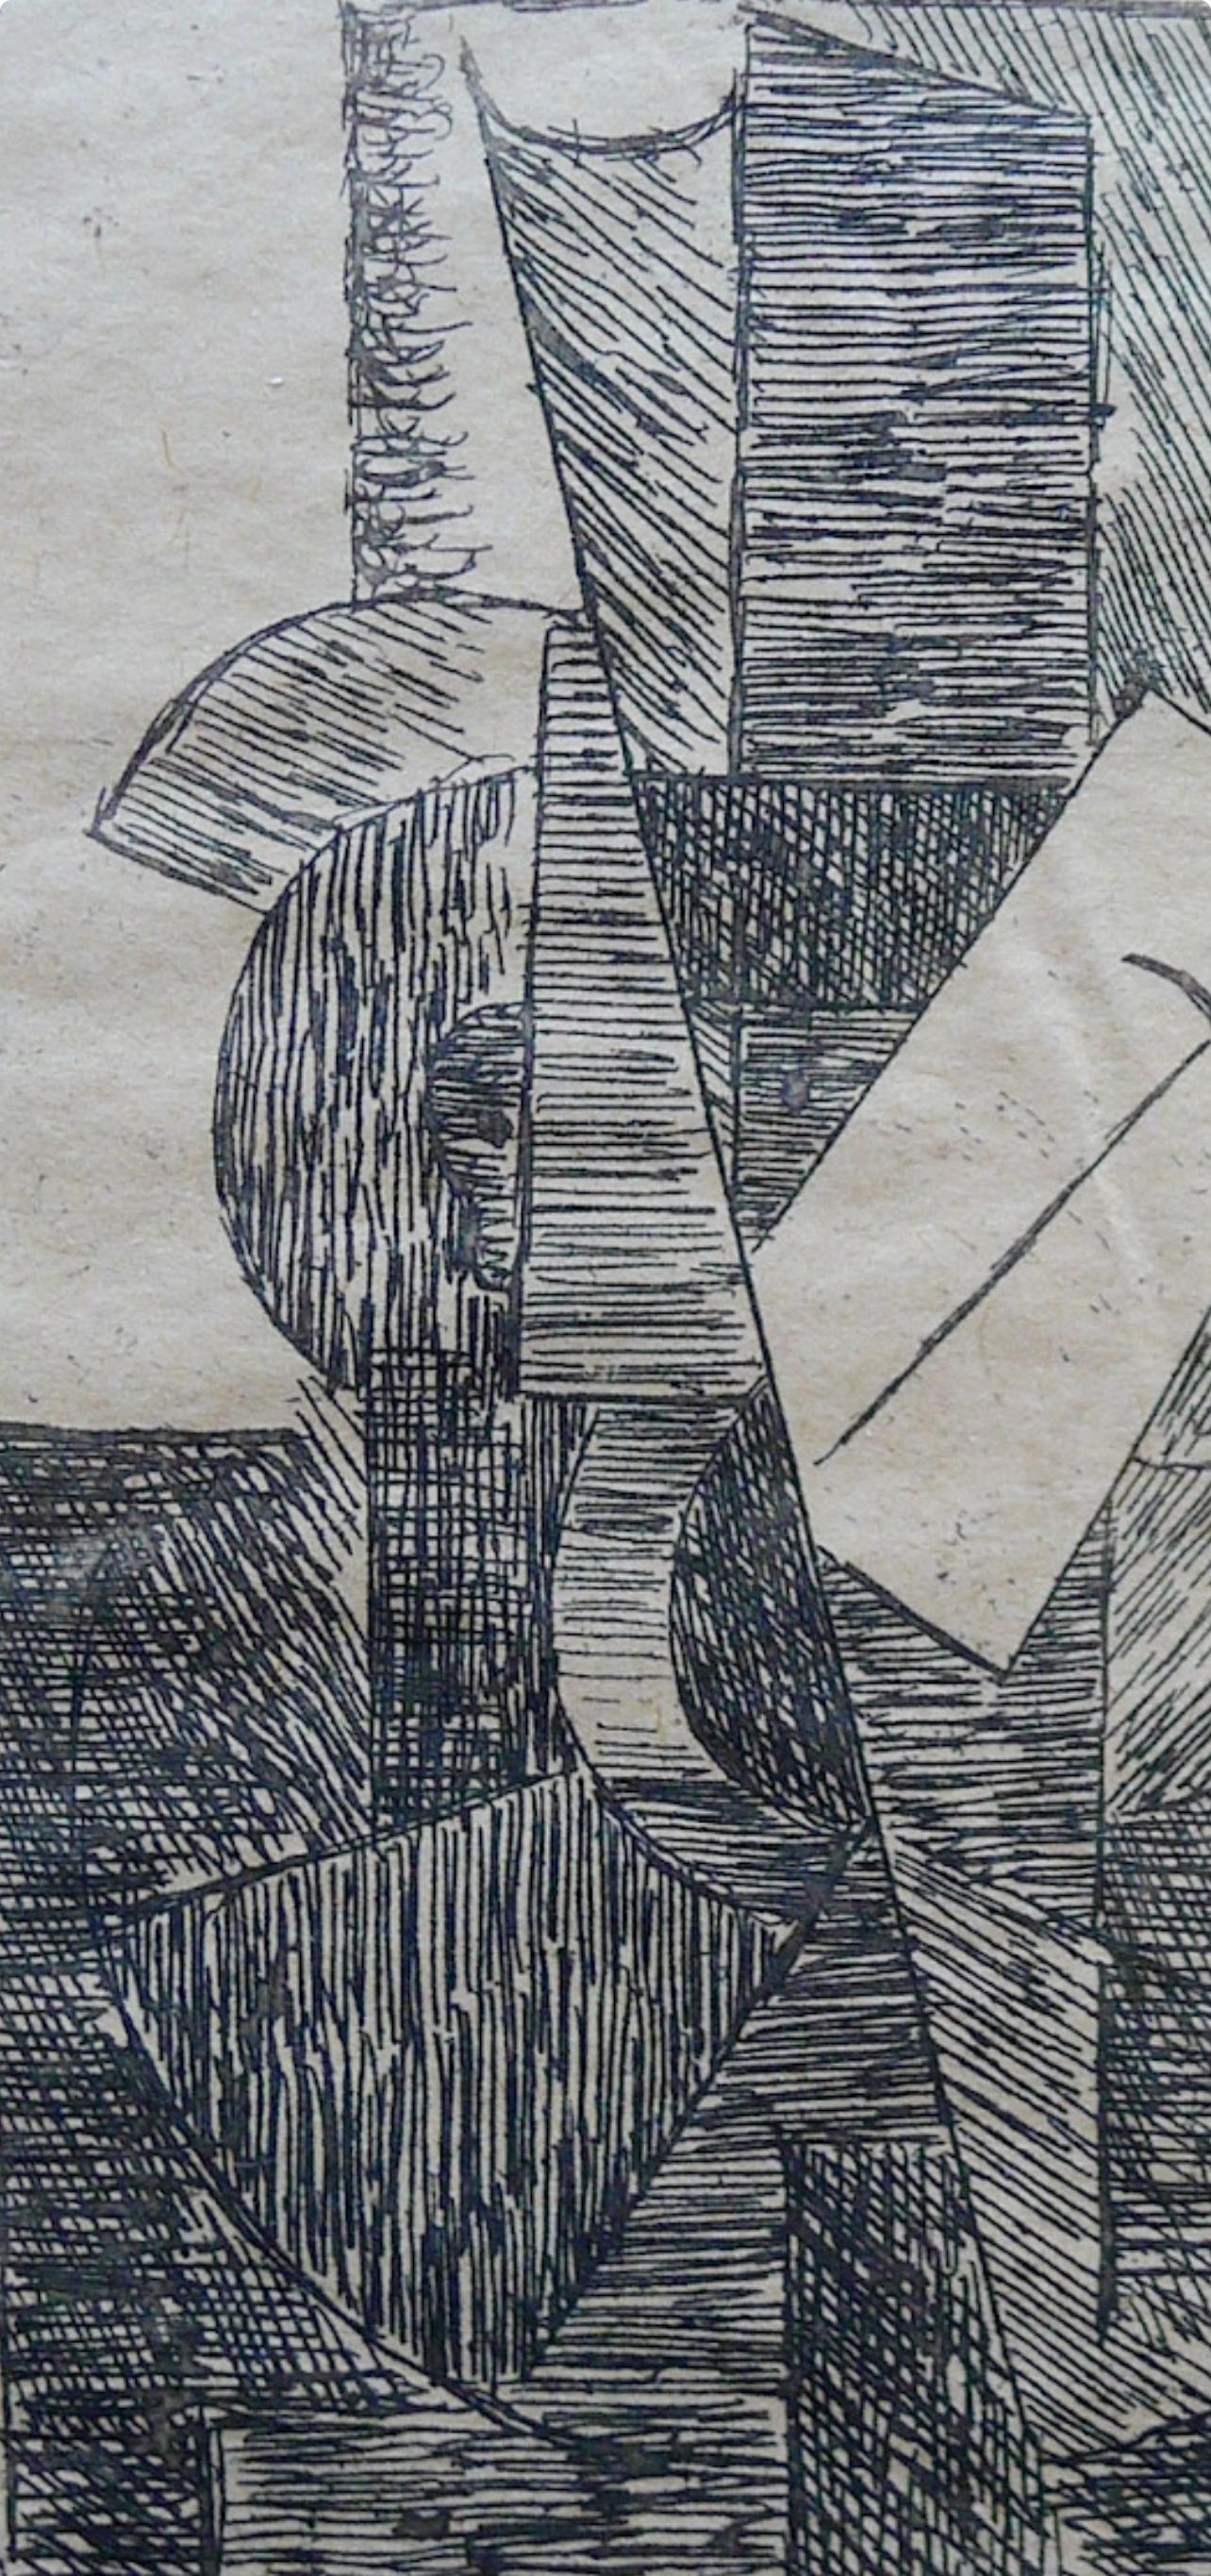 Etching on vélin du Lana Papiers Spéciaux pure rag paper. Unsigned and unnumbered, as issued. Good Condition. Notes: From the folio, Du Cubisme, 1947. Published by Compagnie Française des Arts Graphiques, Paris; printed by R. Girard et Cie, Paris,